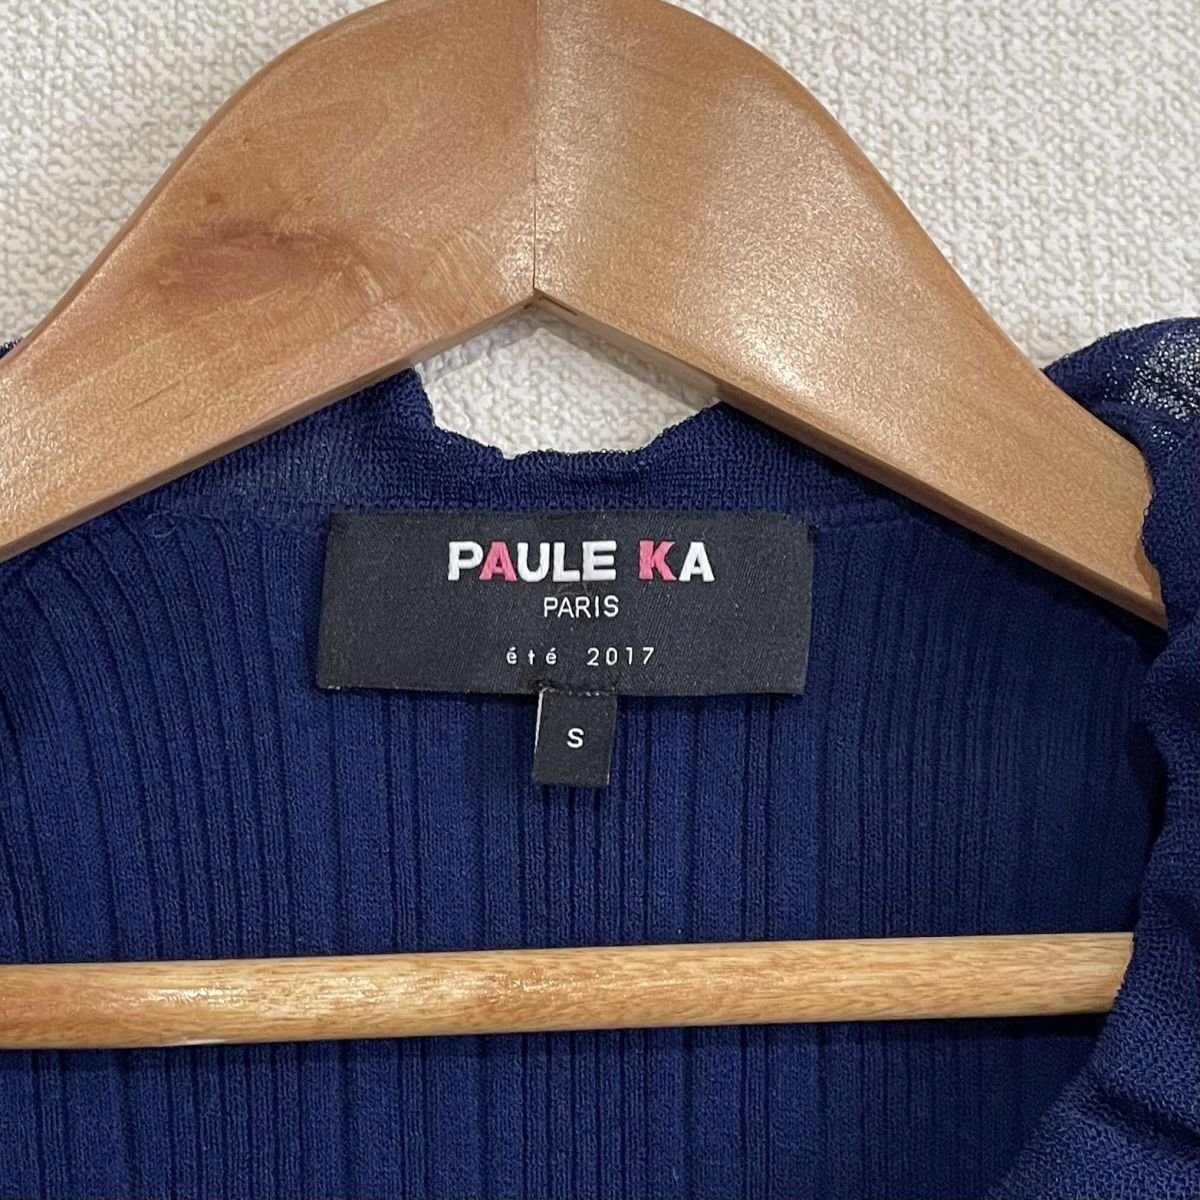  прекрасный товар PAULE KA paul (pole) Carib материалы оборка кардиган S голубой *